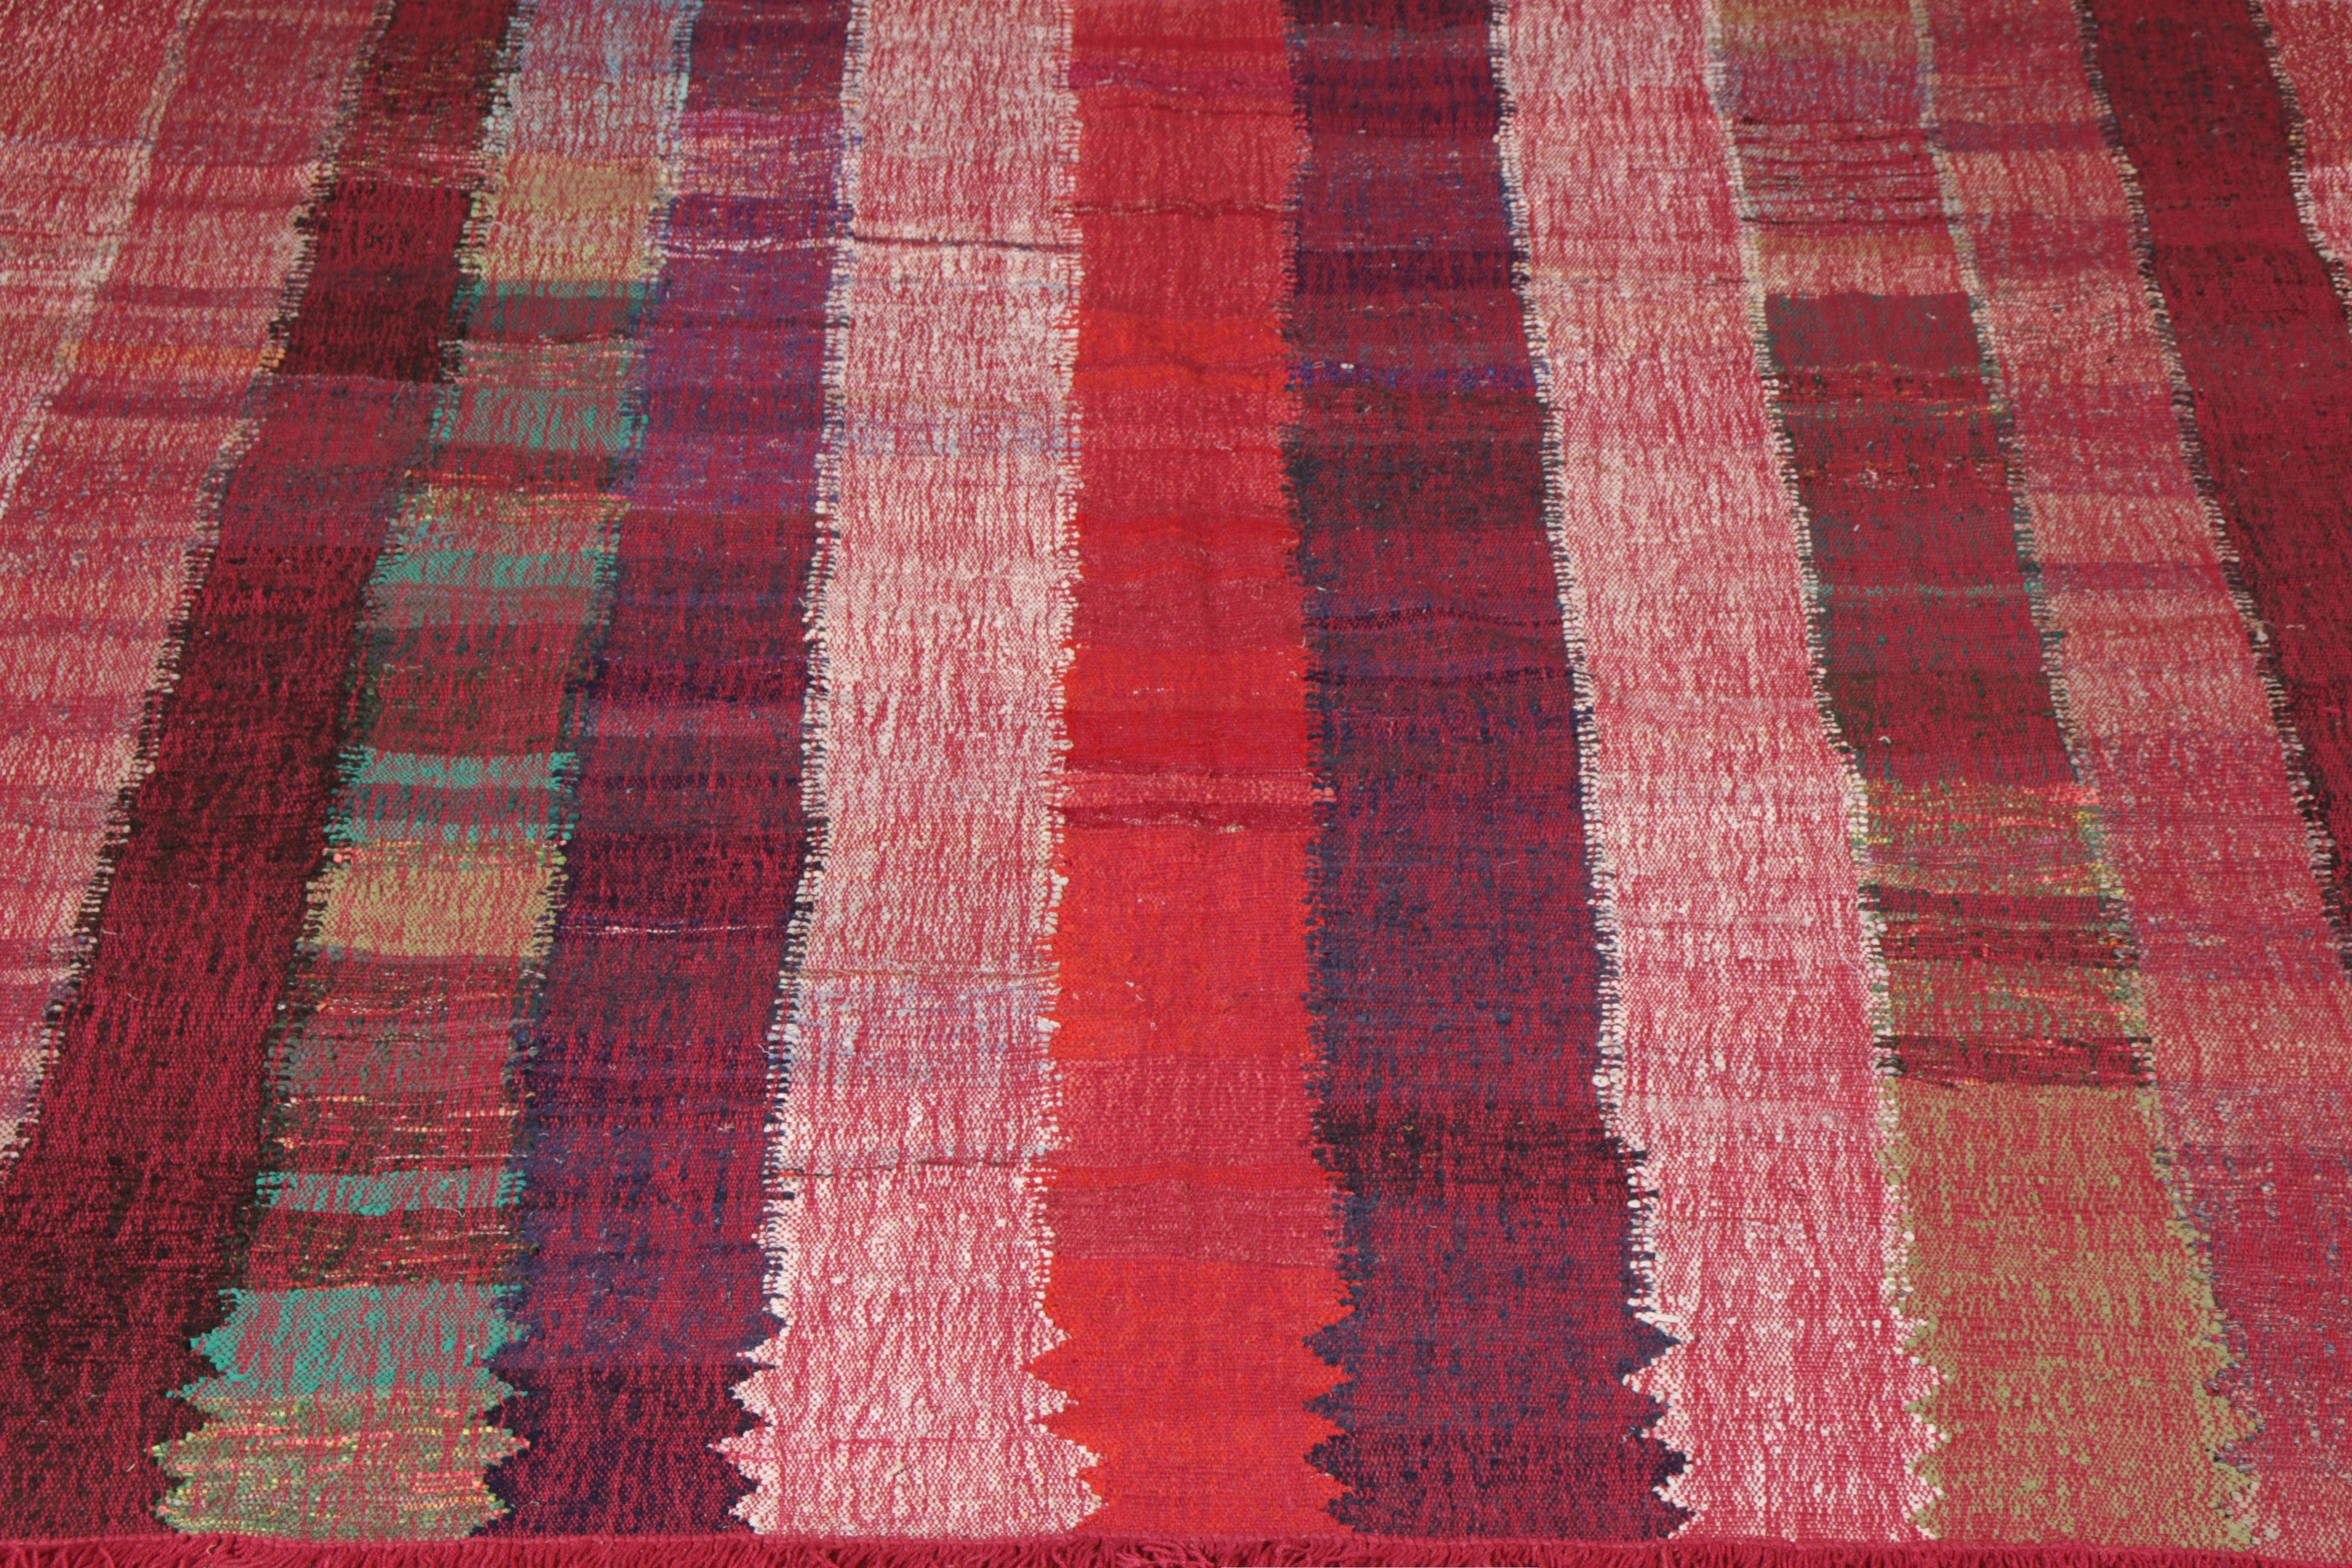 Hand-Woven Modern Striped Kilim Geometric Red Pink Flat-Weave by Rug & Kilim